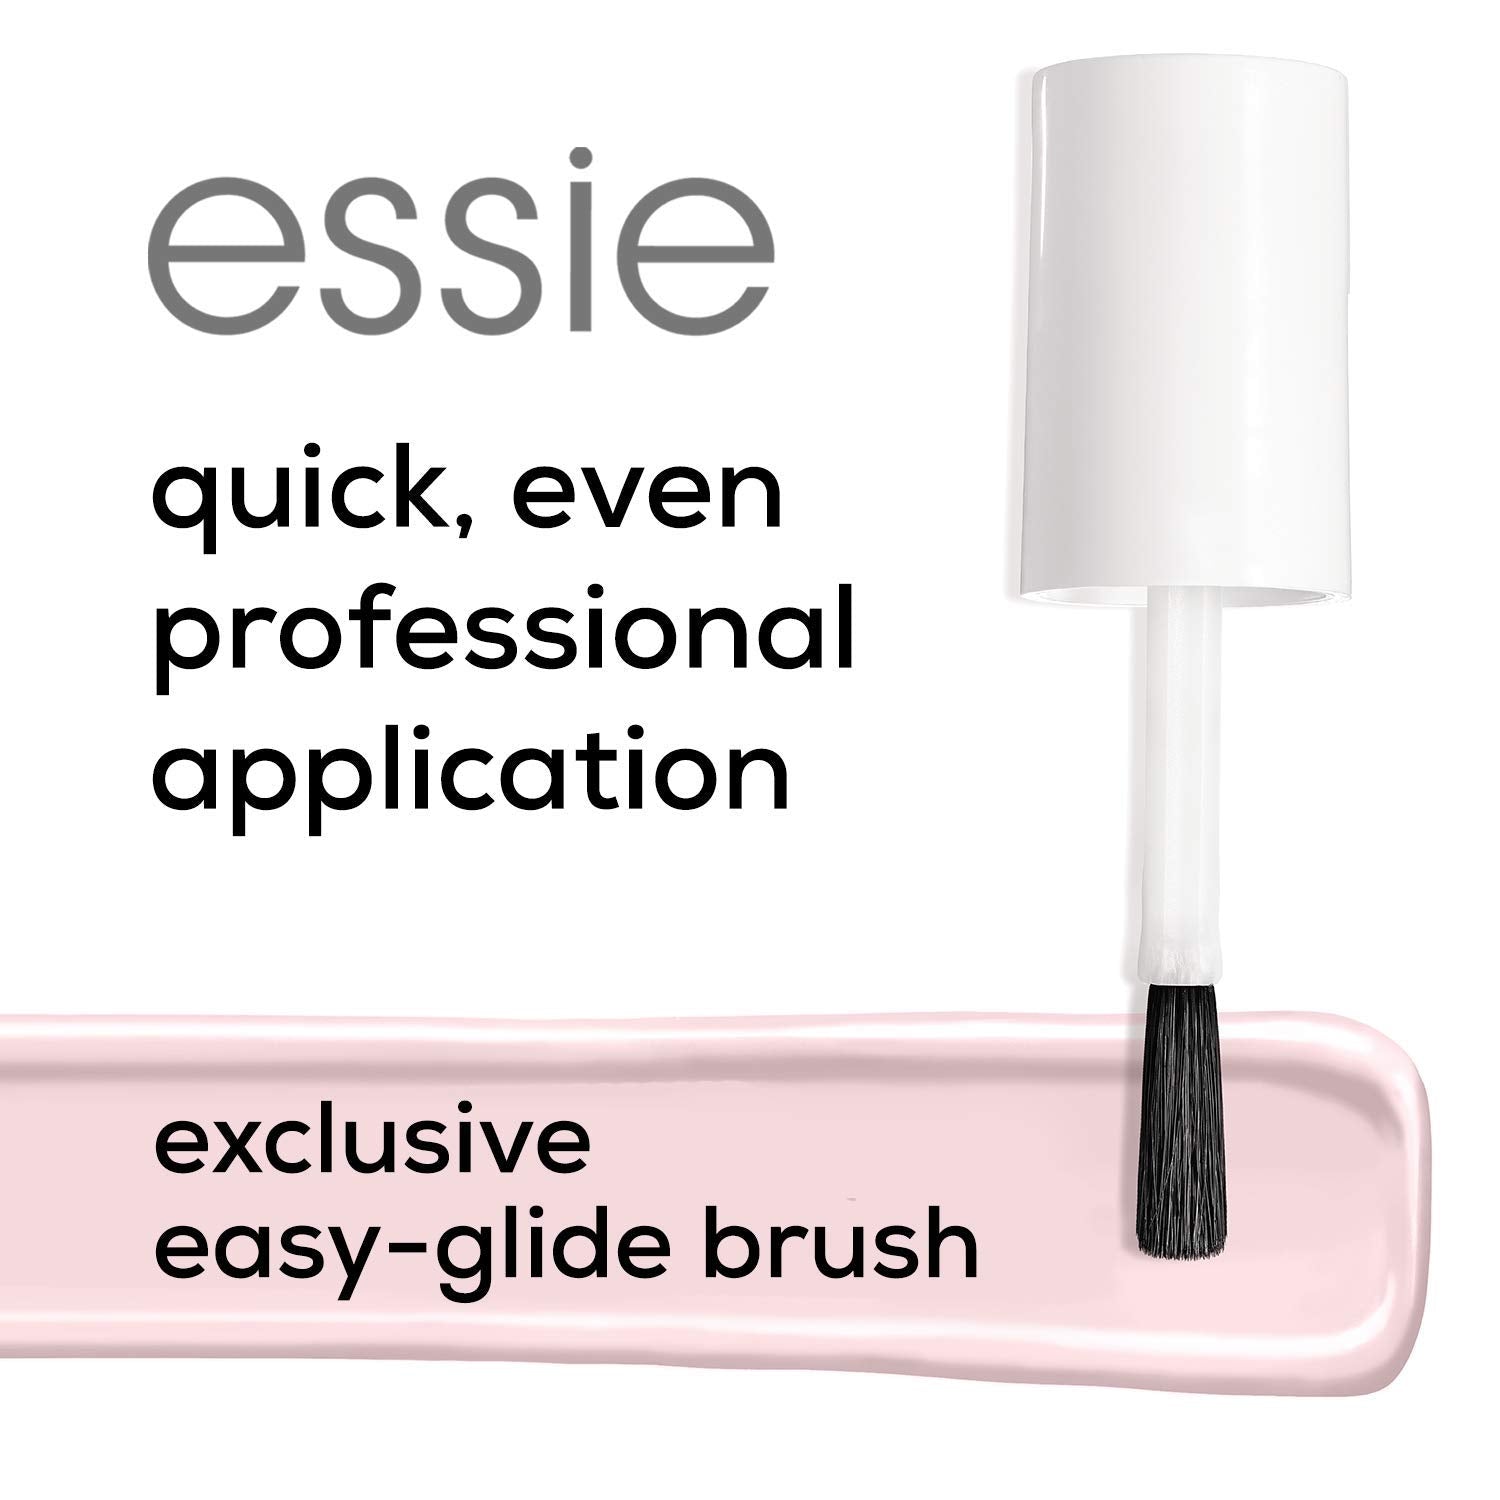 ESSIE Nail Polish Limited Edition